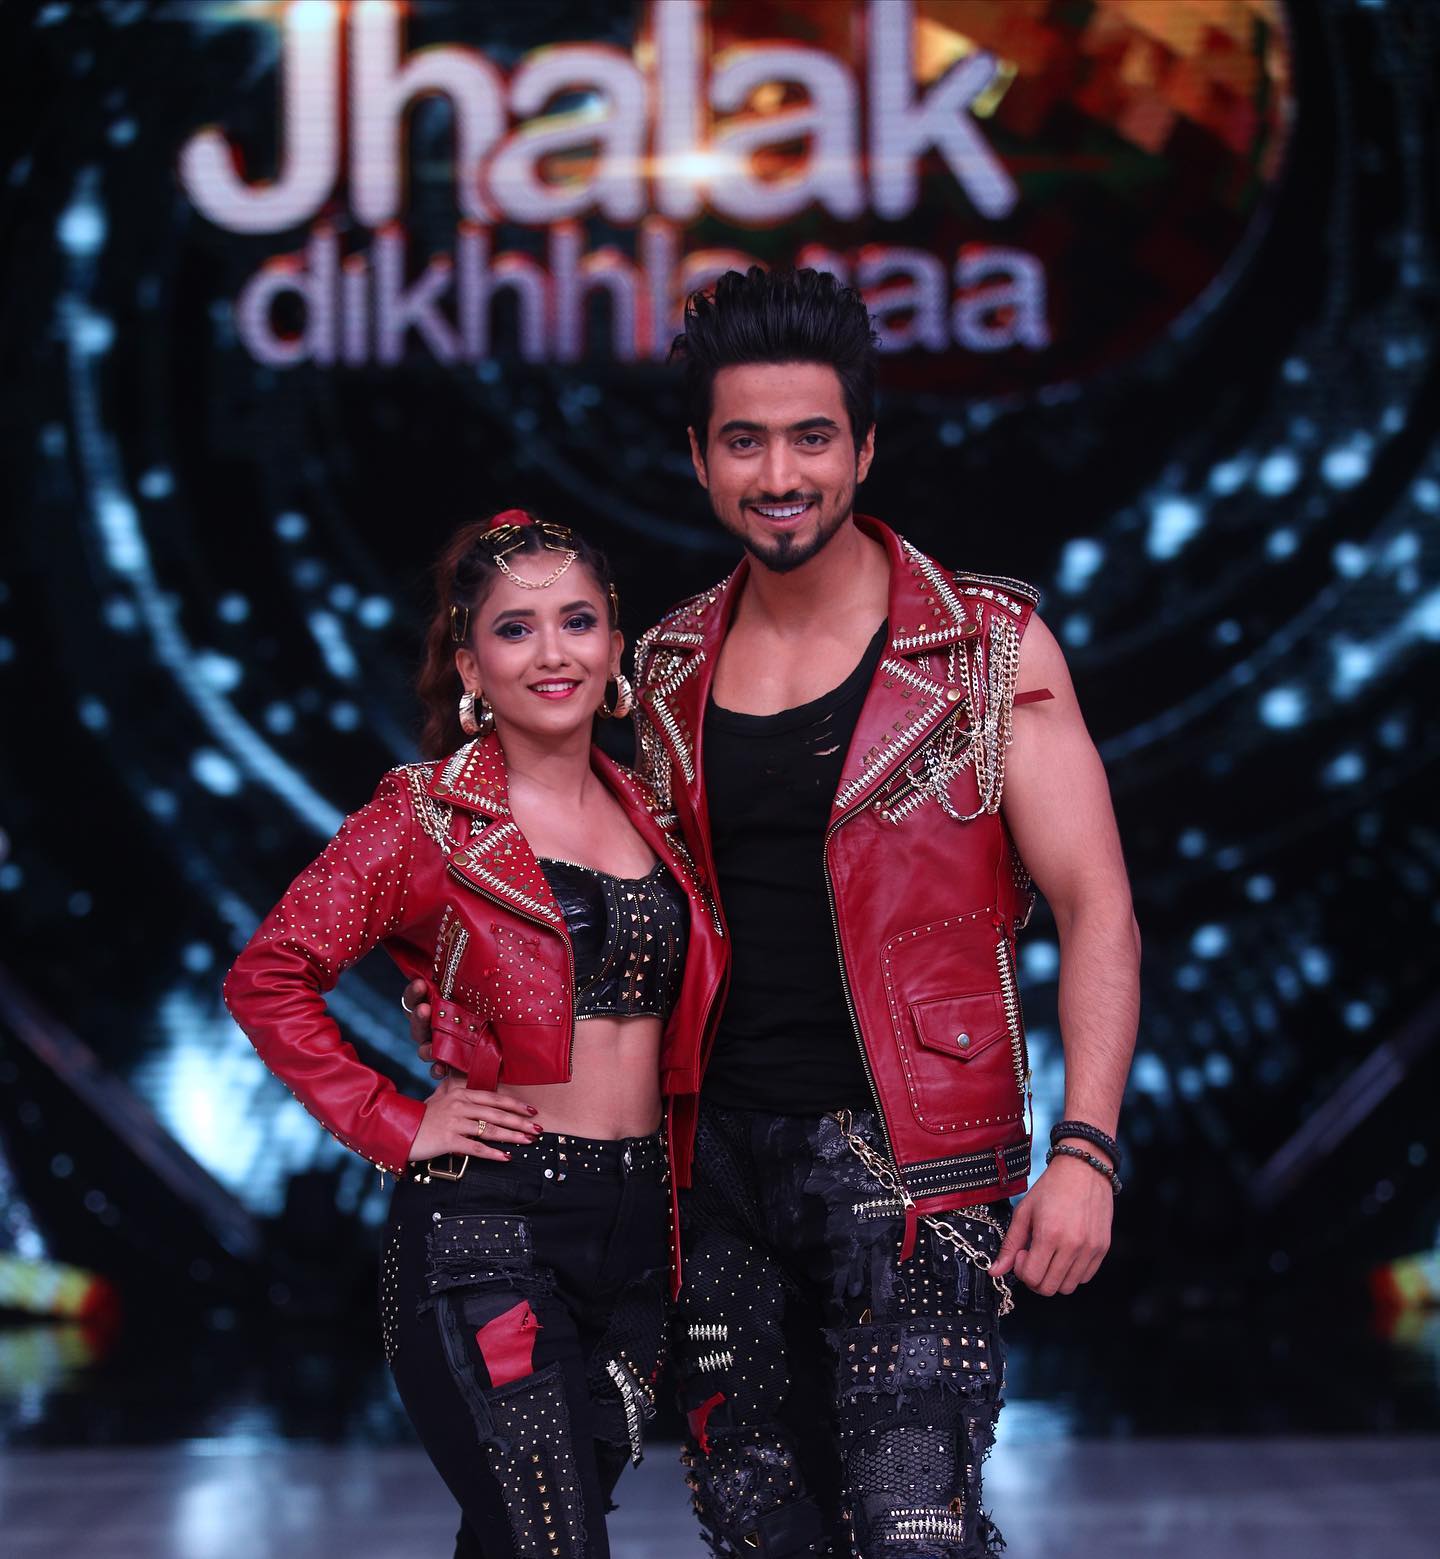 contestants per episode fee for jhalak dikhla ja 